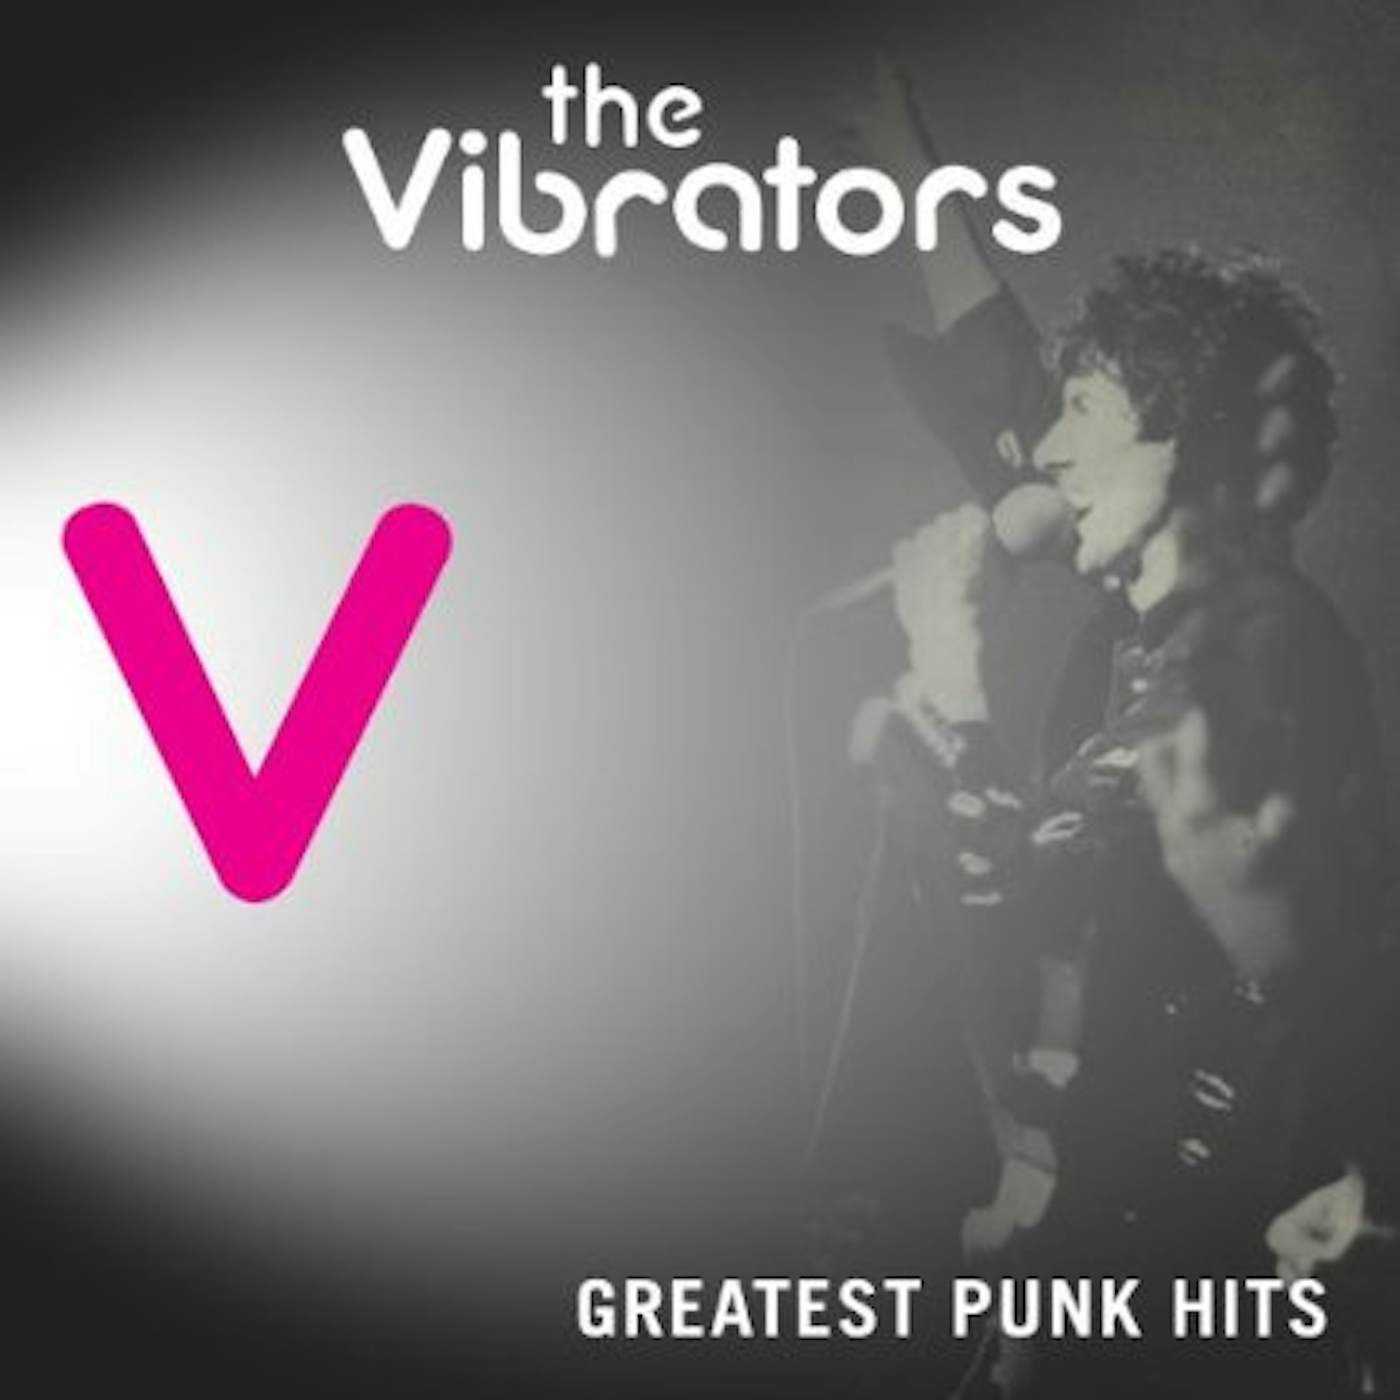 The Vibrators GREATEST PUNK HITS CD